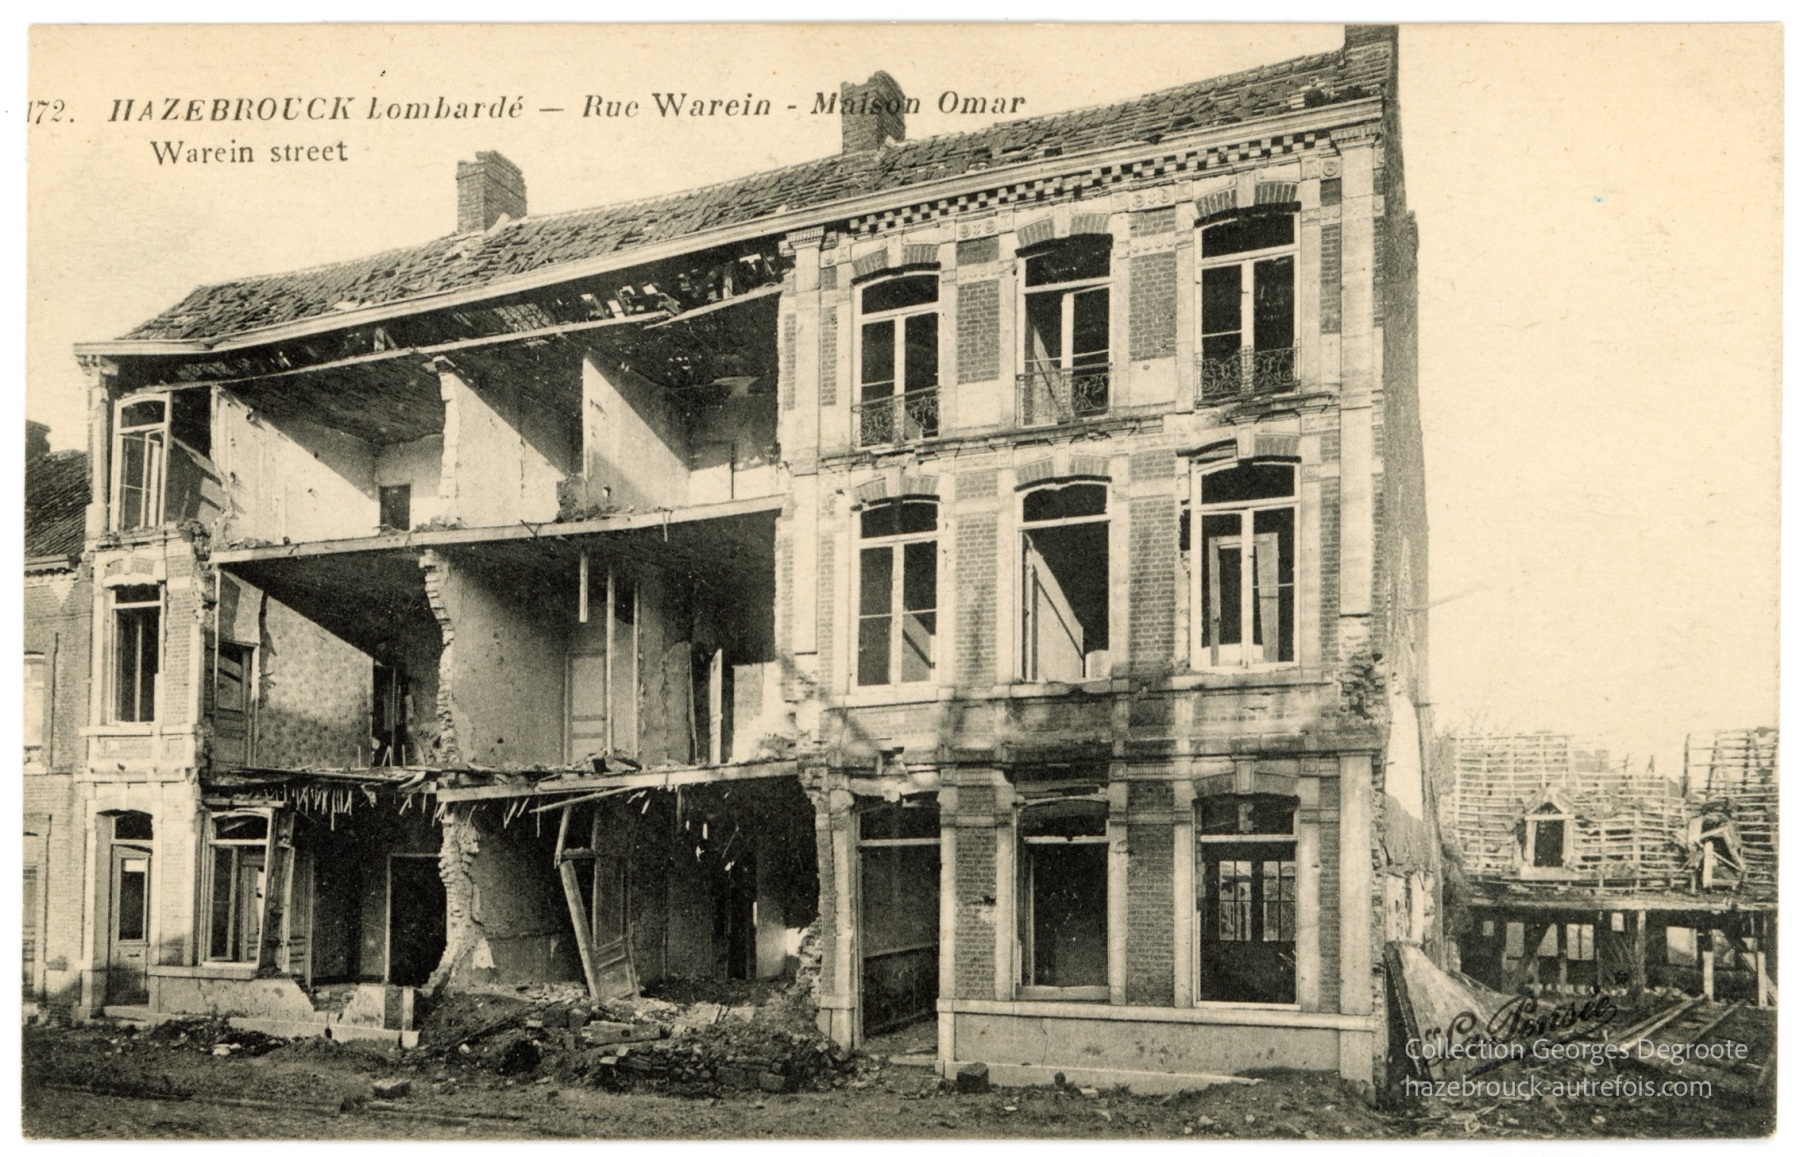 Hazebrouck bombardé - Rue Warein - Maison Omar